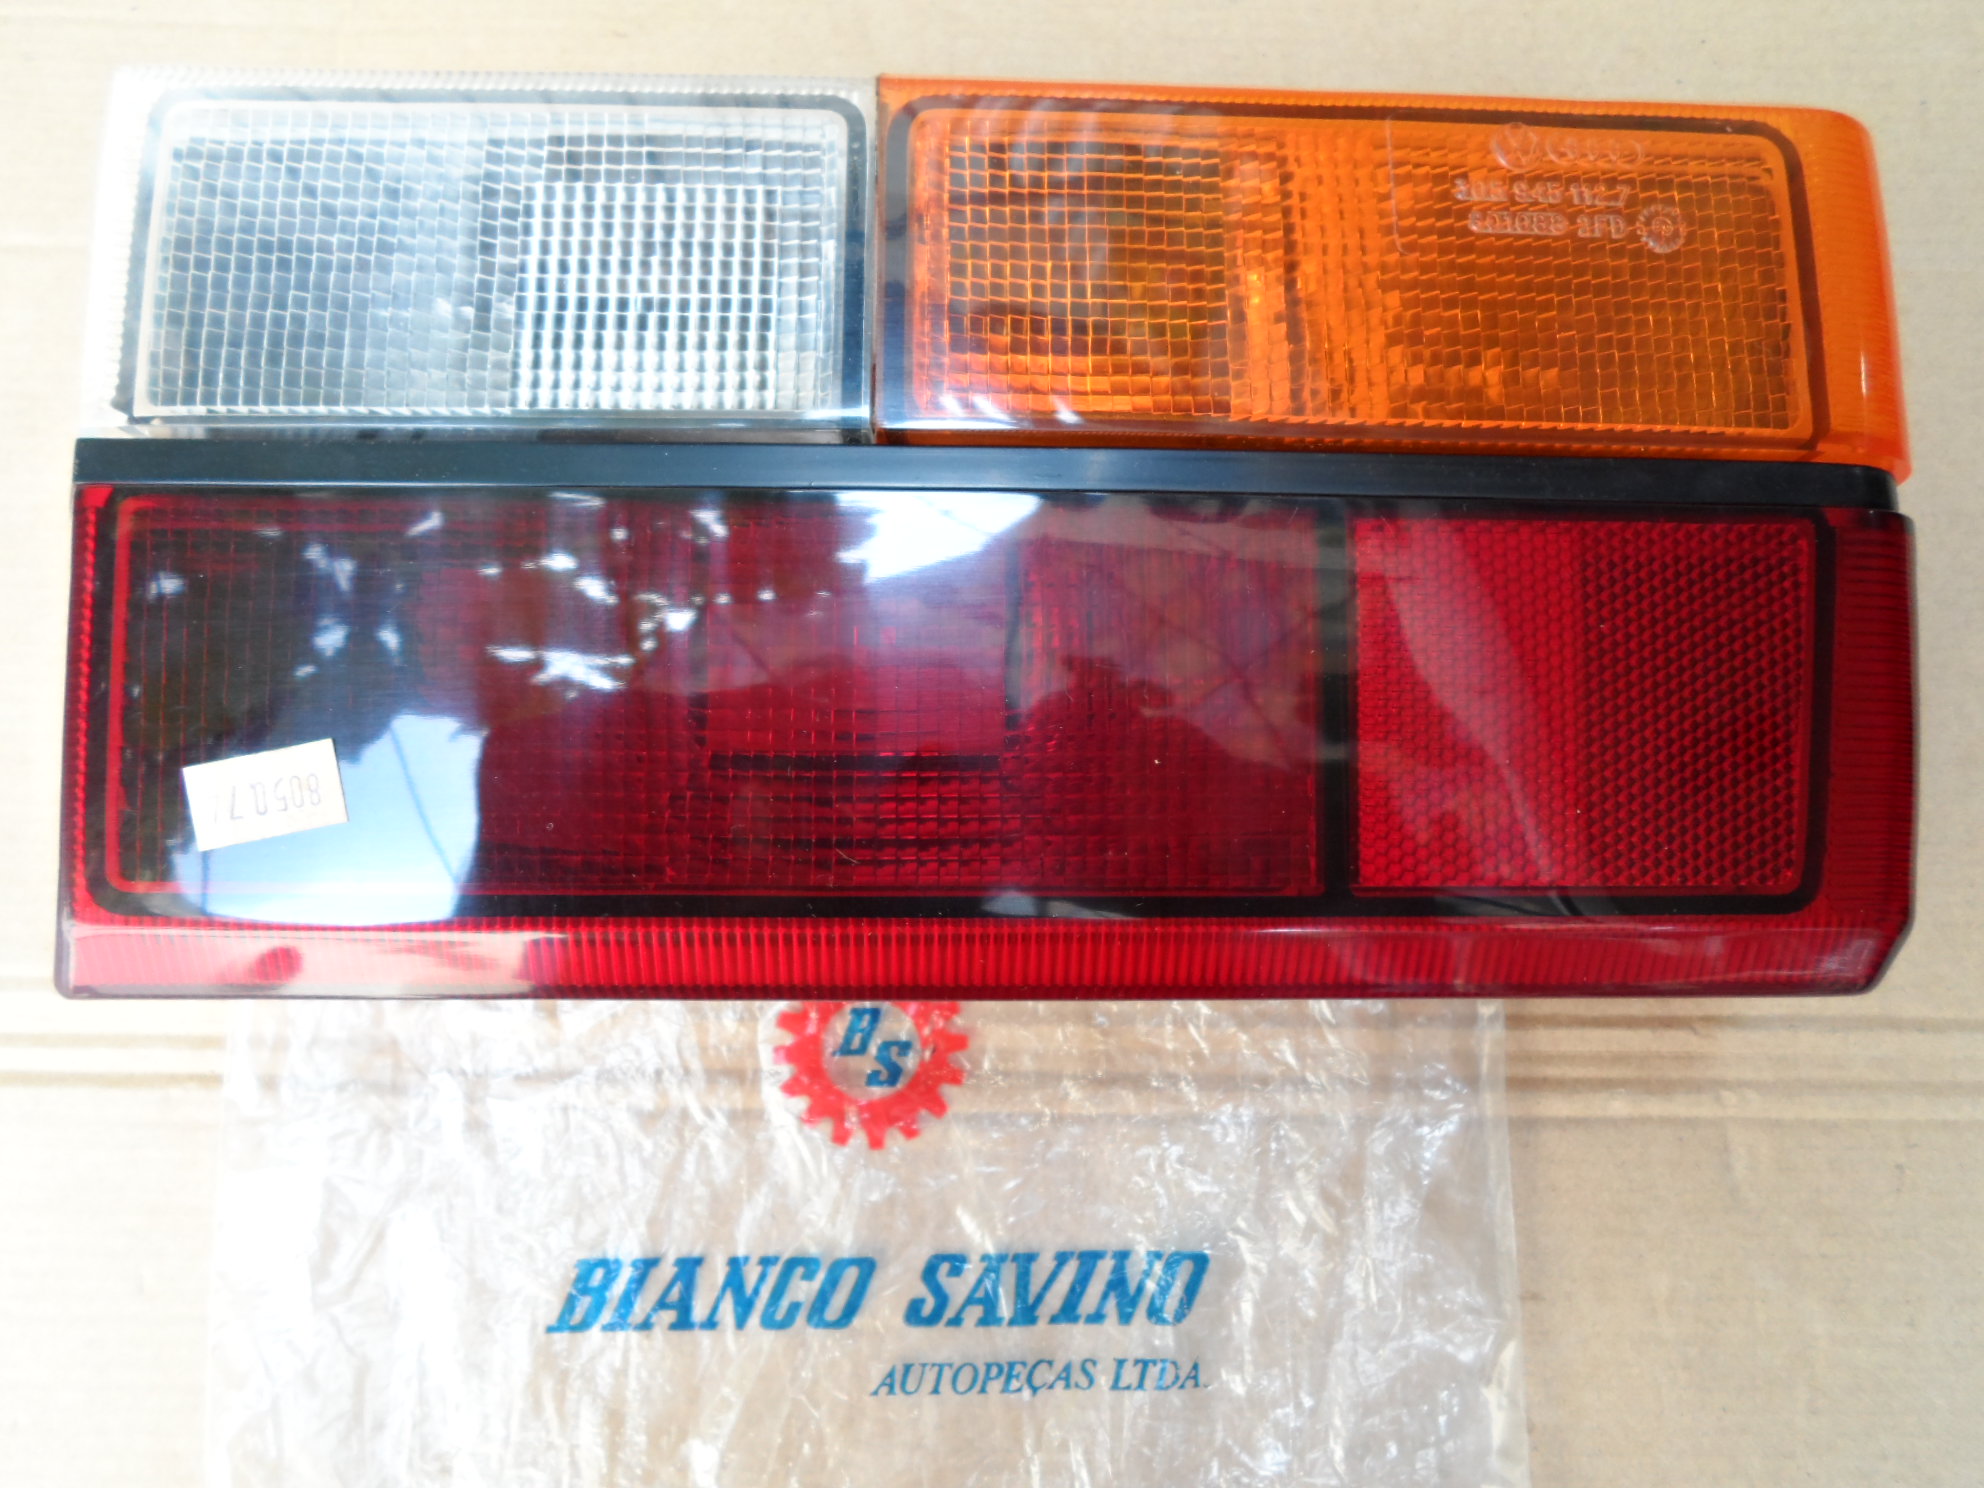 Lanterna Tricolor traseira Original Bianco Savino L/Dir  VW Gol BX-AP 80/86